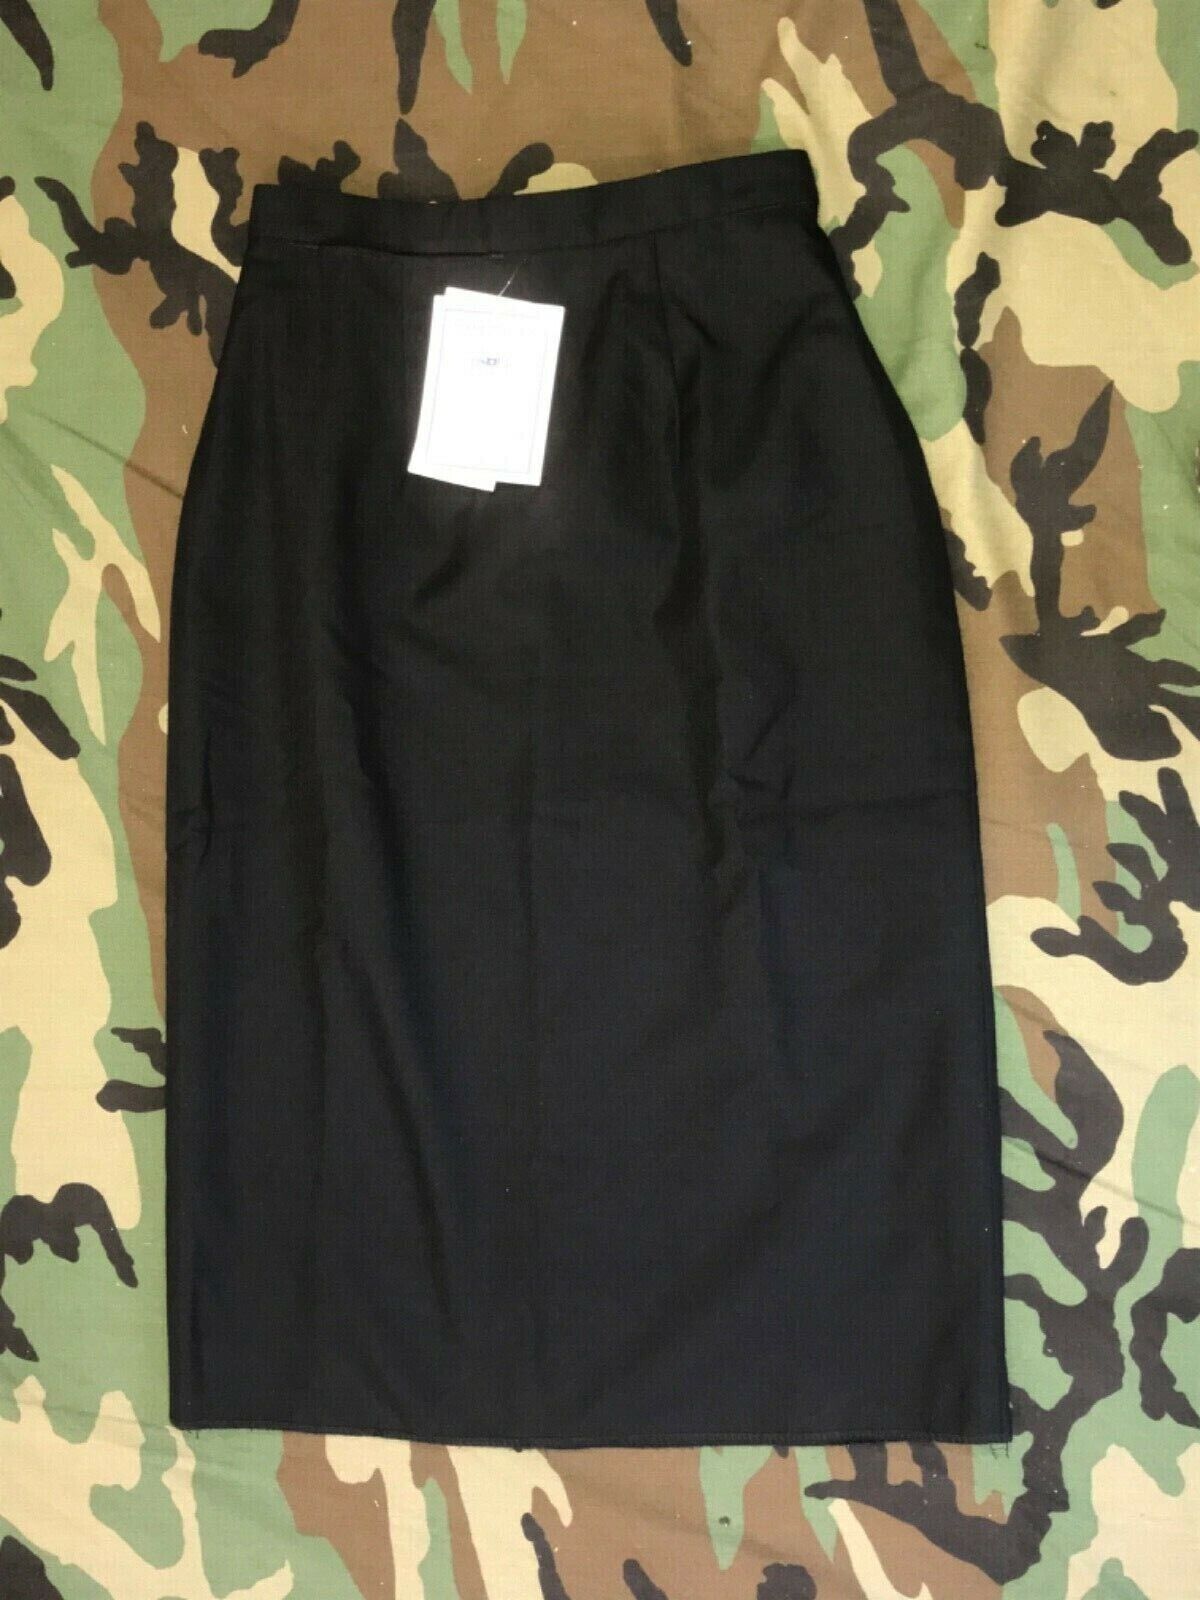 DSCP U.S. Army Dress Blue Uniform Skirt Women's NSN 8410-01-551-9229 SZ 6MR